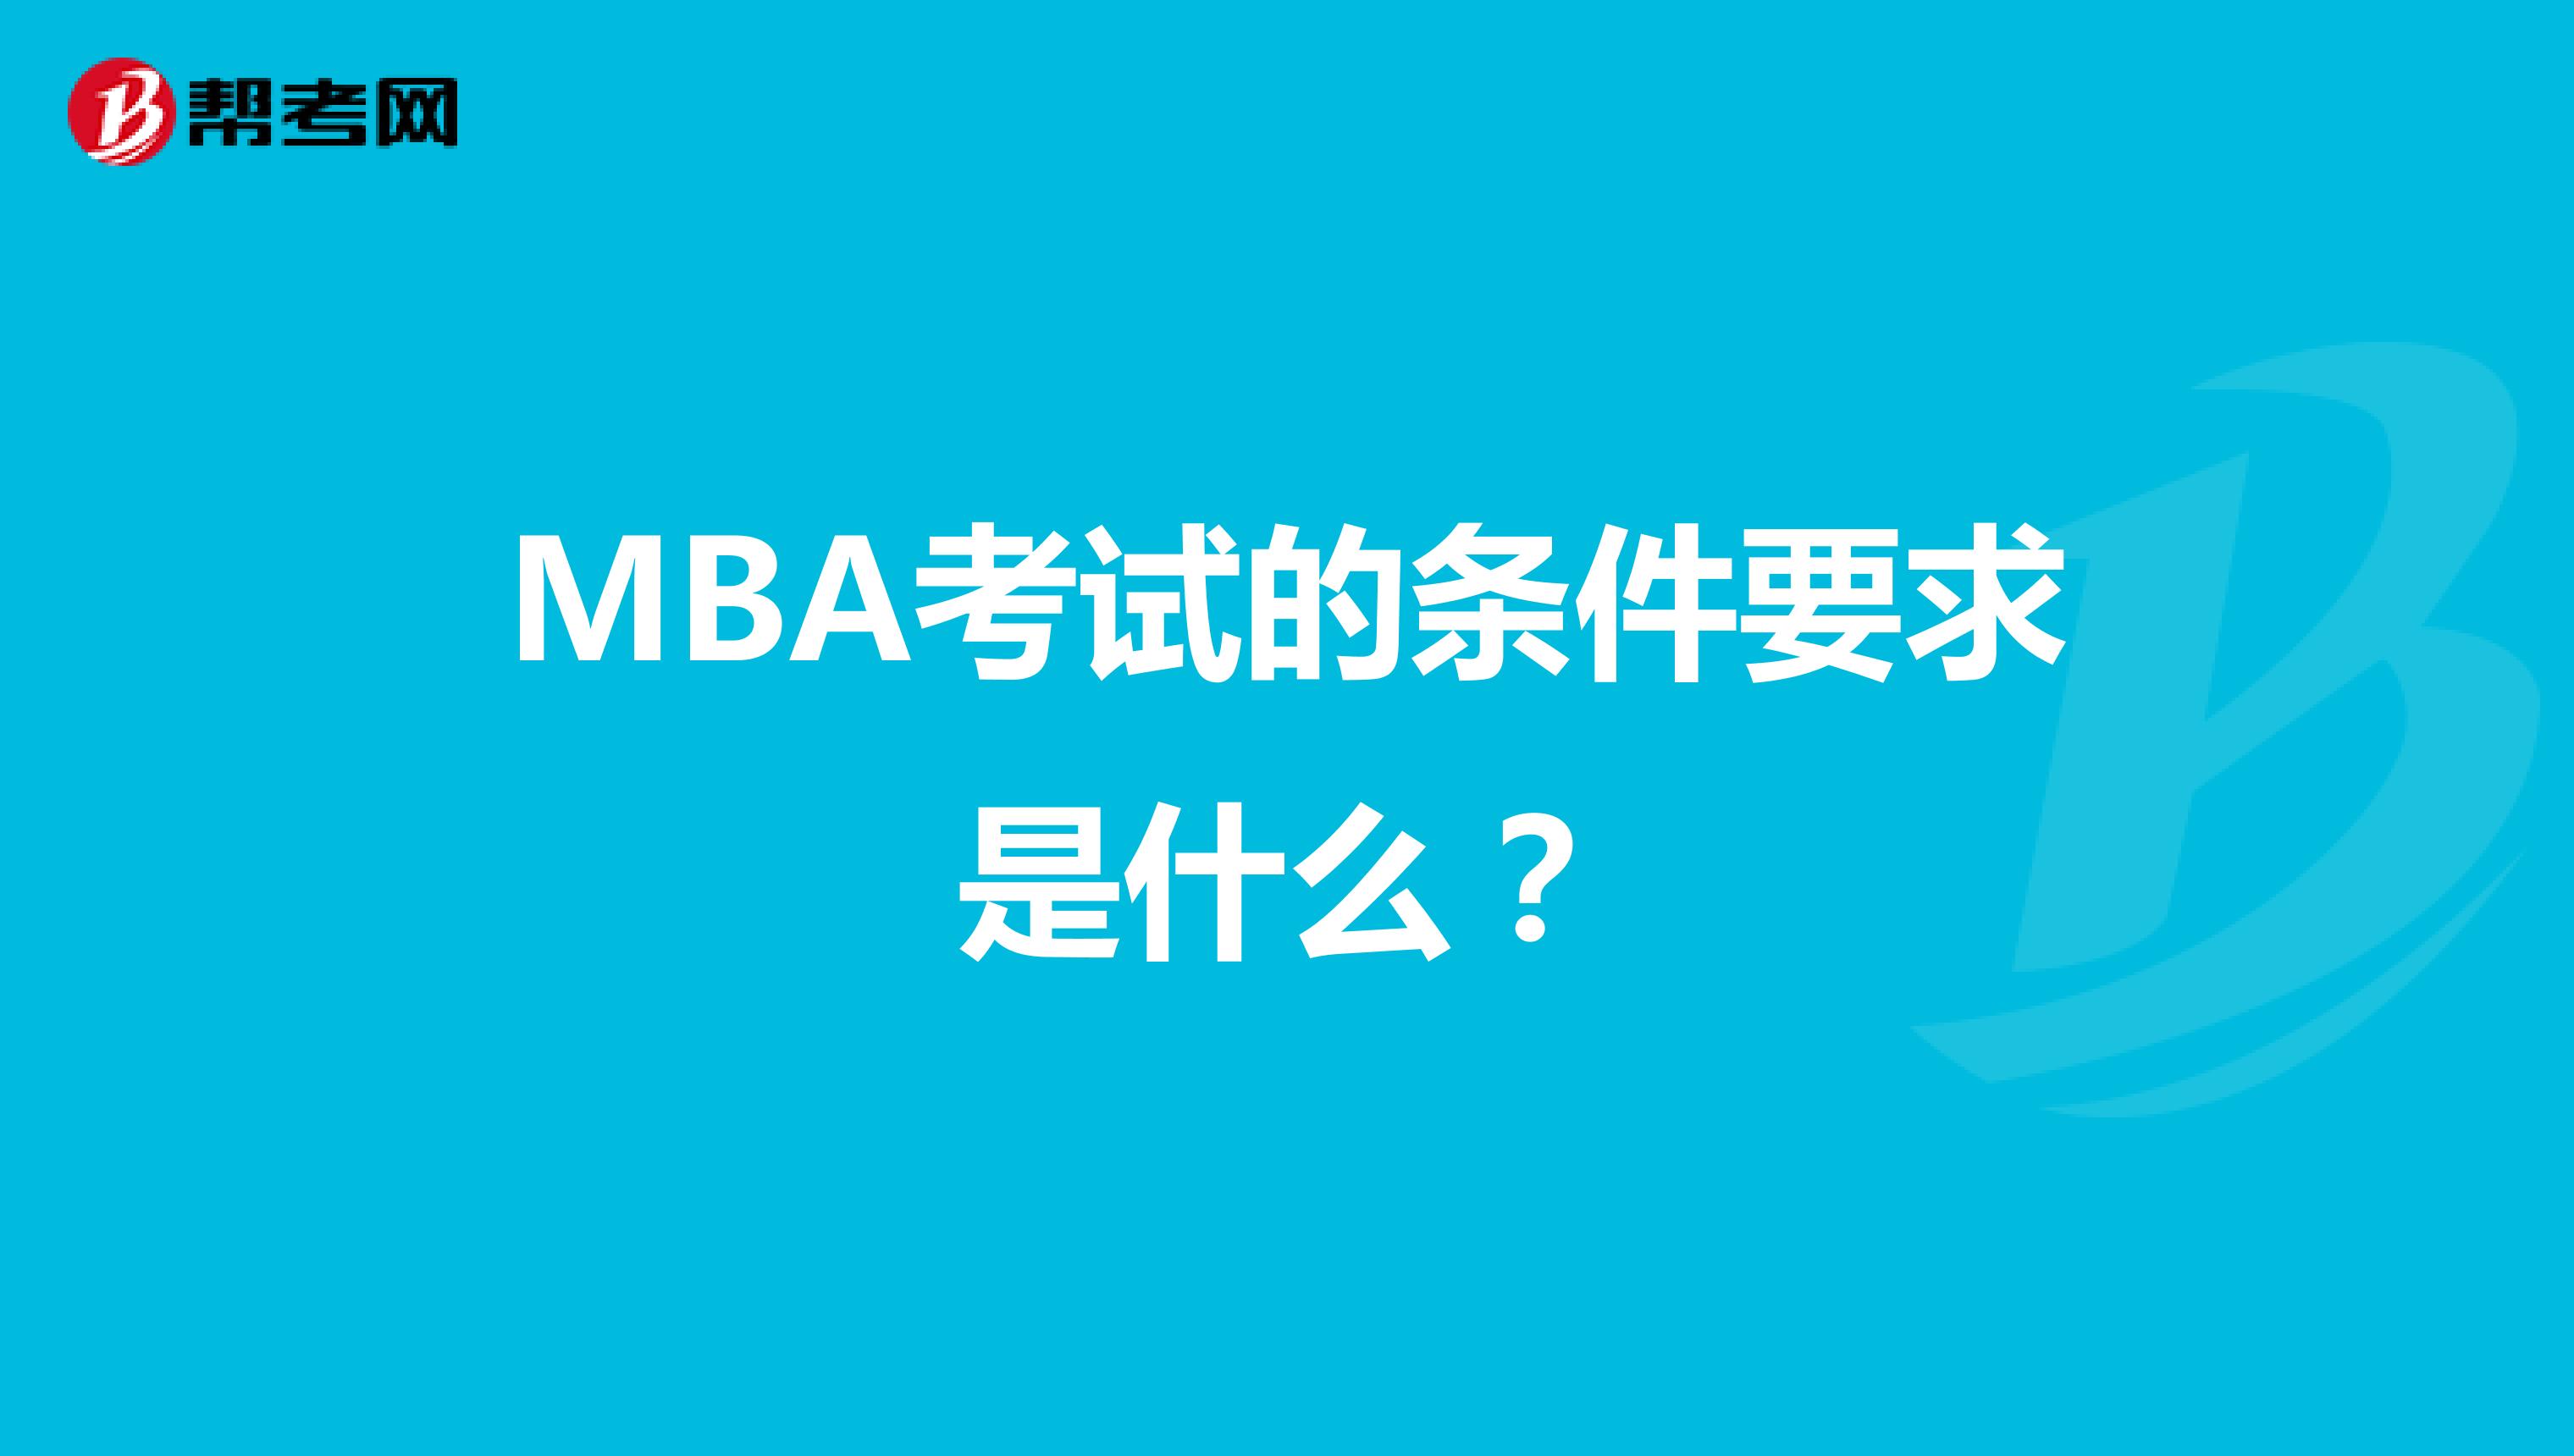 MBA考试的条件要求是什么？